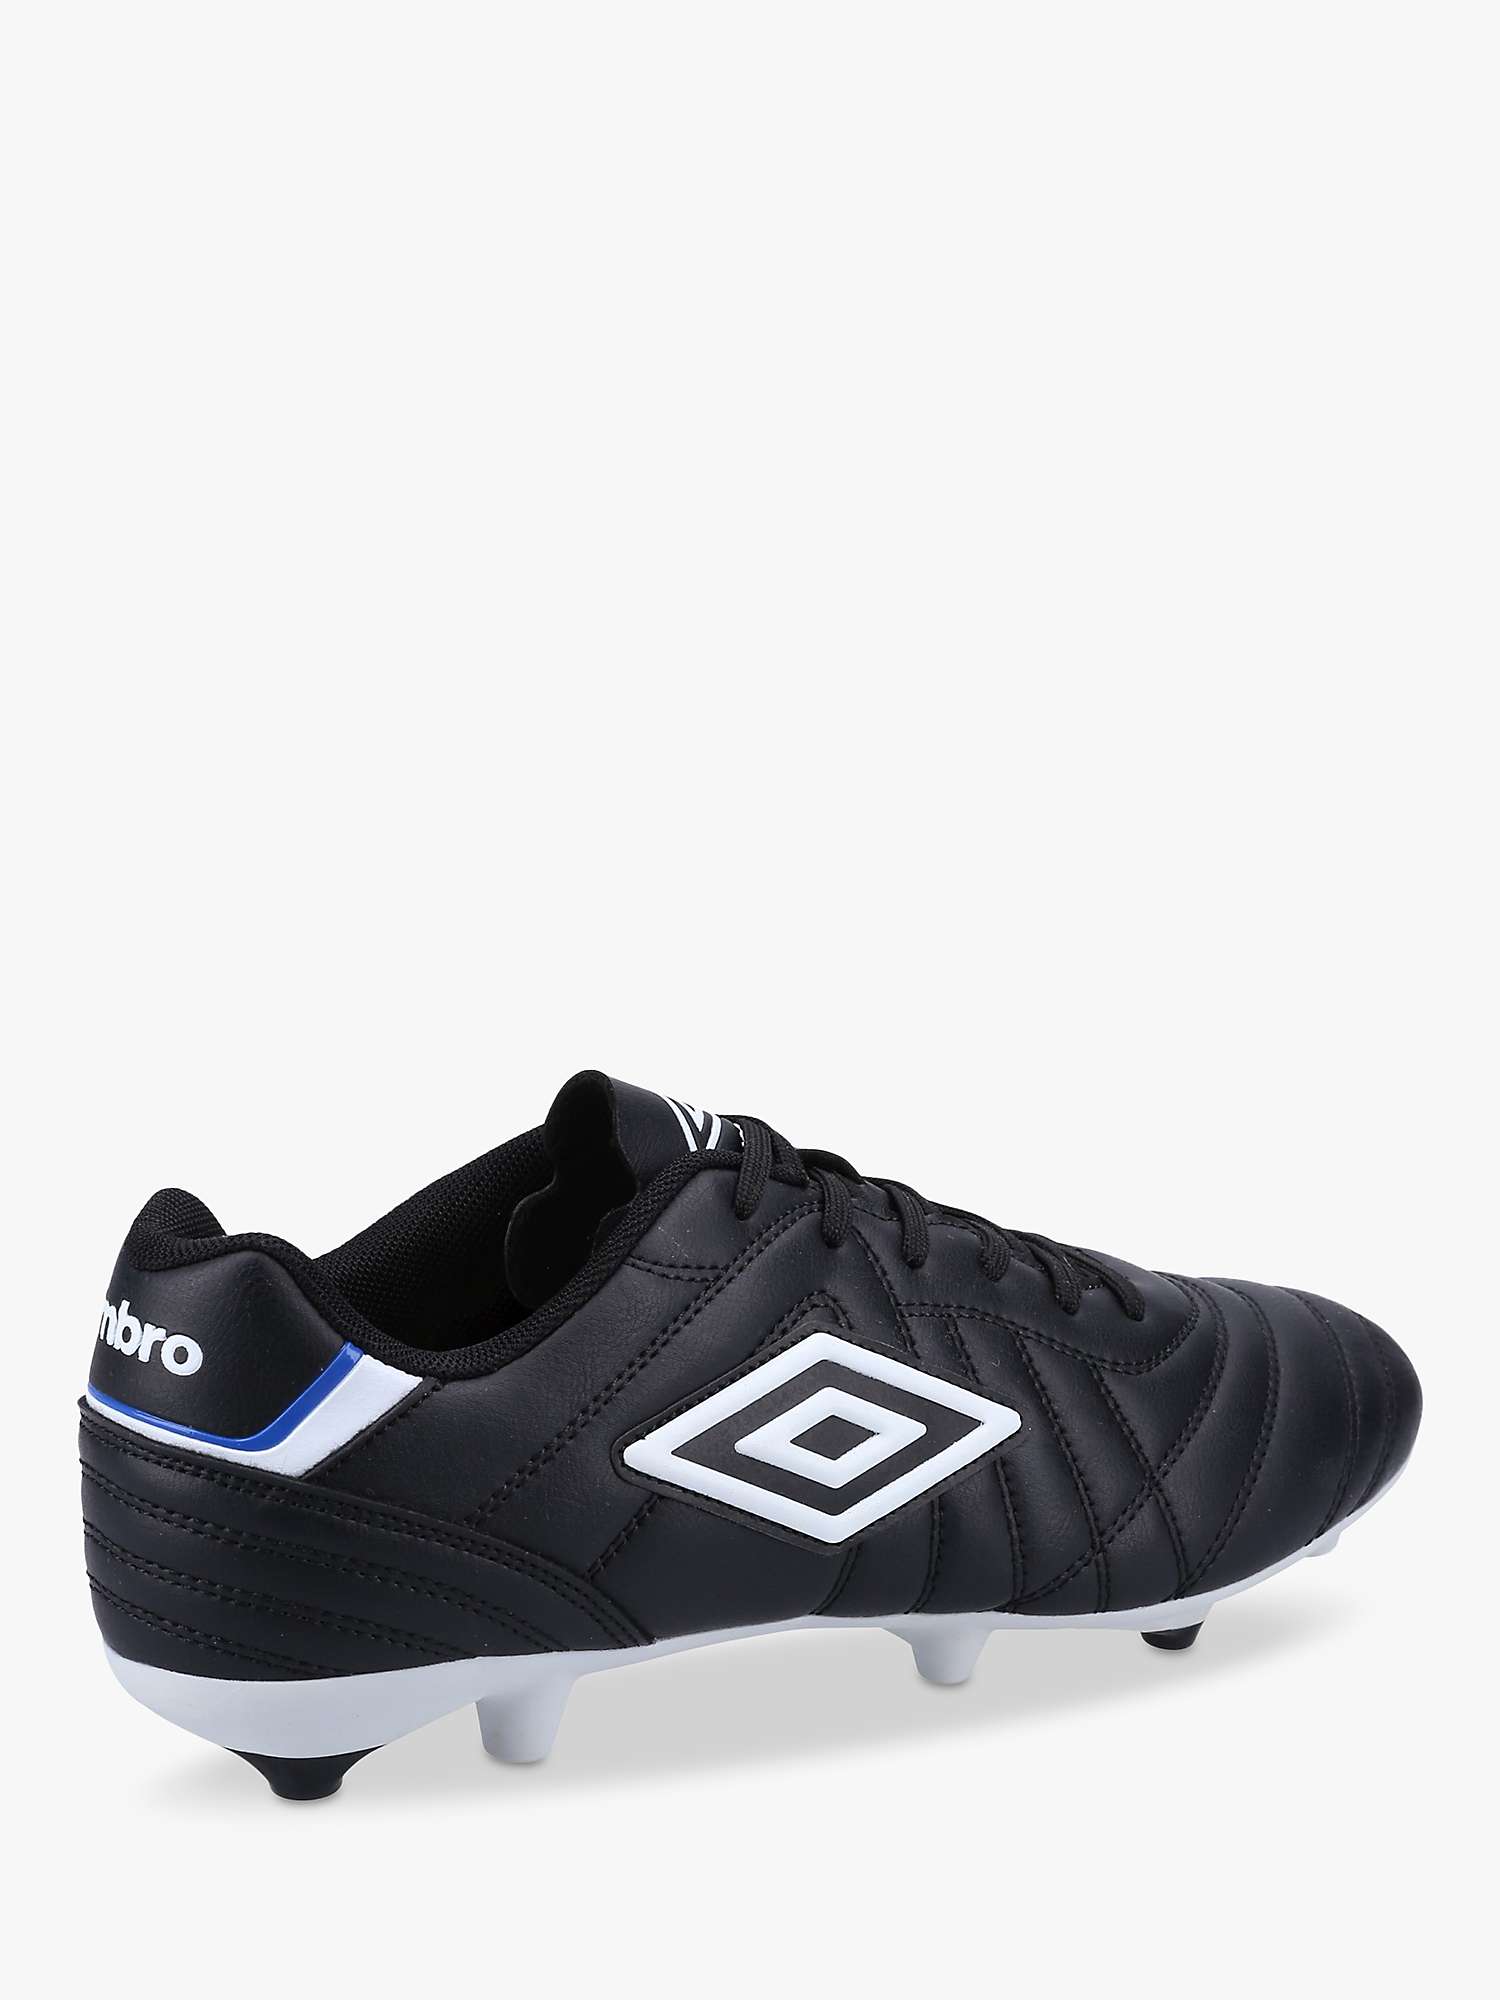 Buy Umbro Speciali Liga Firm Ground Football Boots, Black Online at johnlewis.com